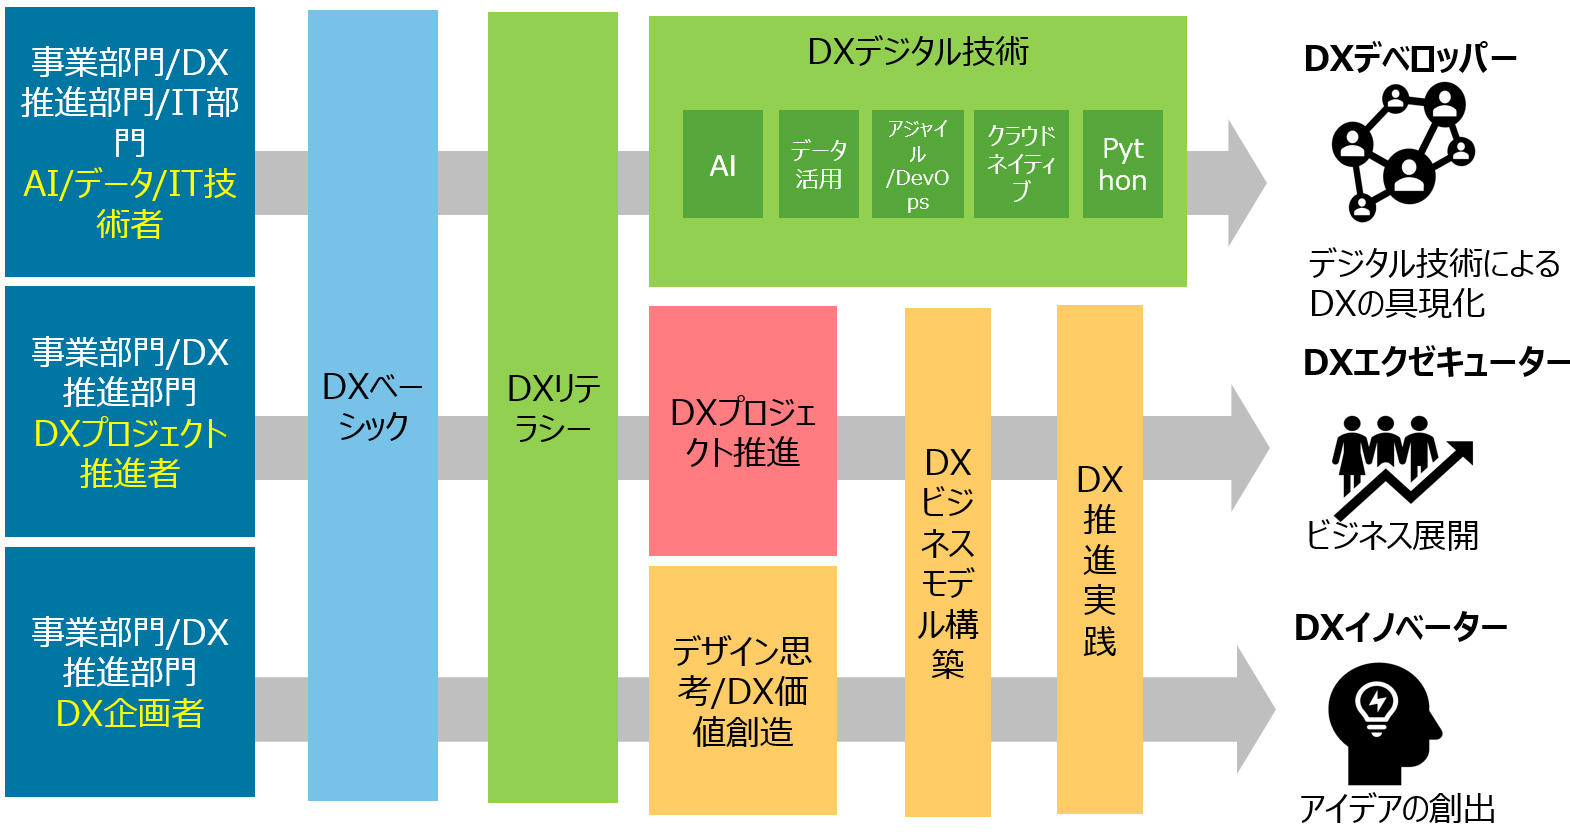 DX推進者育成ロードマップ